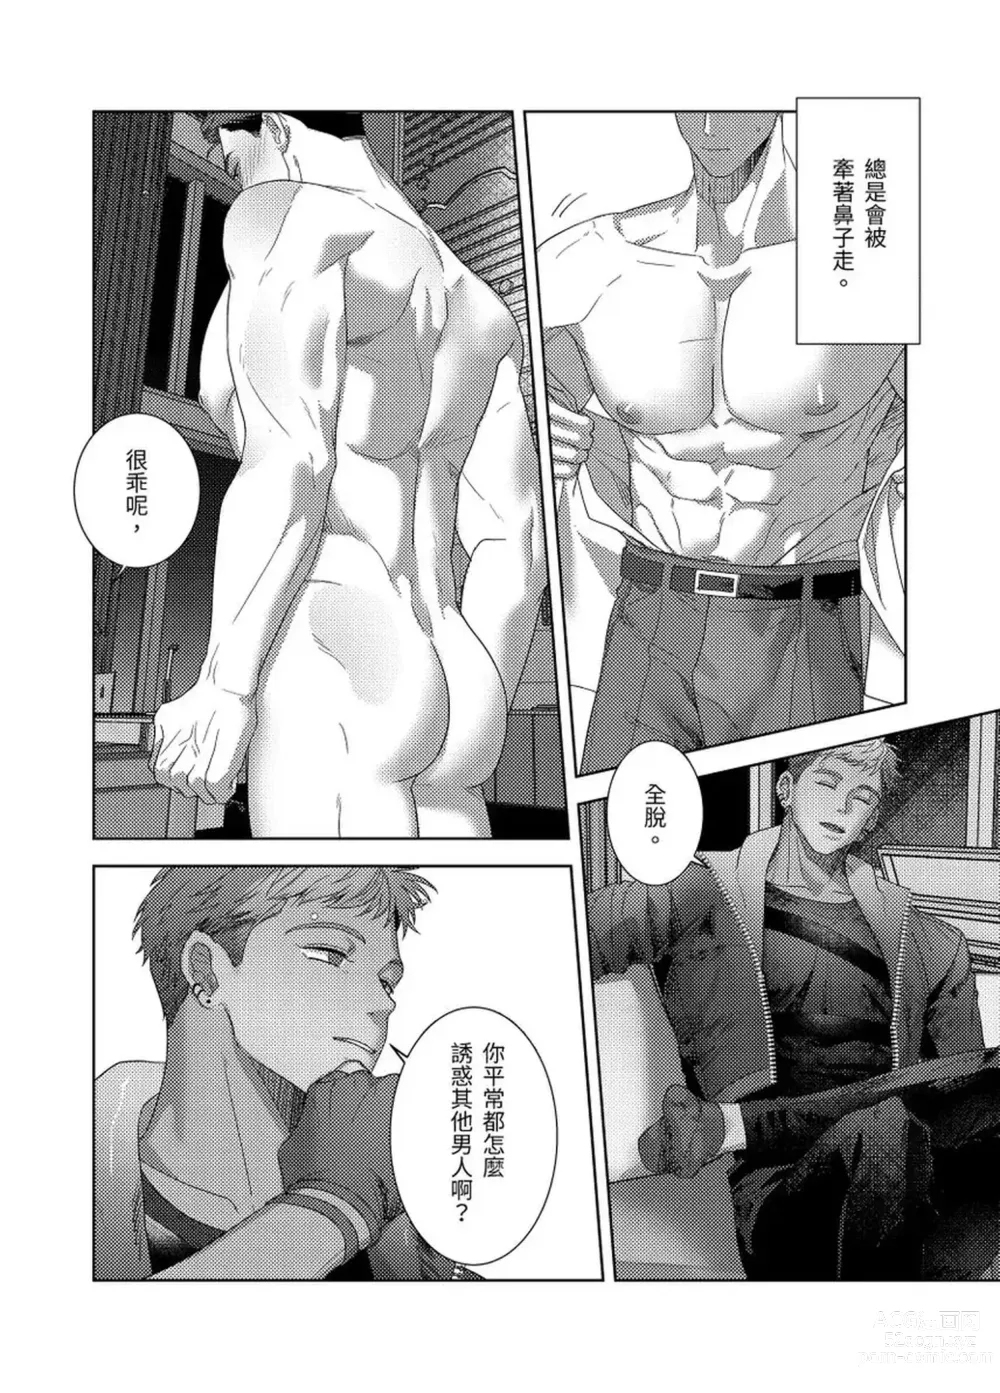 Page 45 of manga Dom&Sub